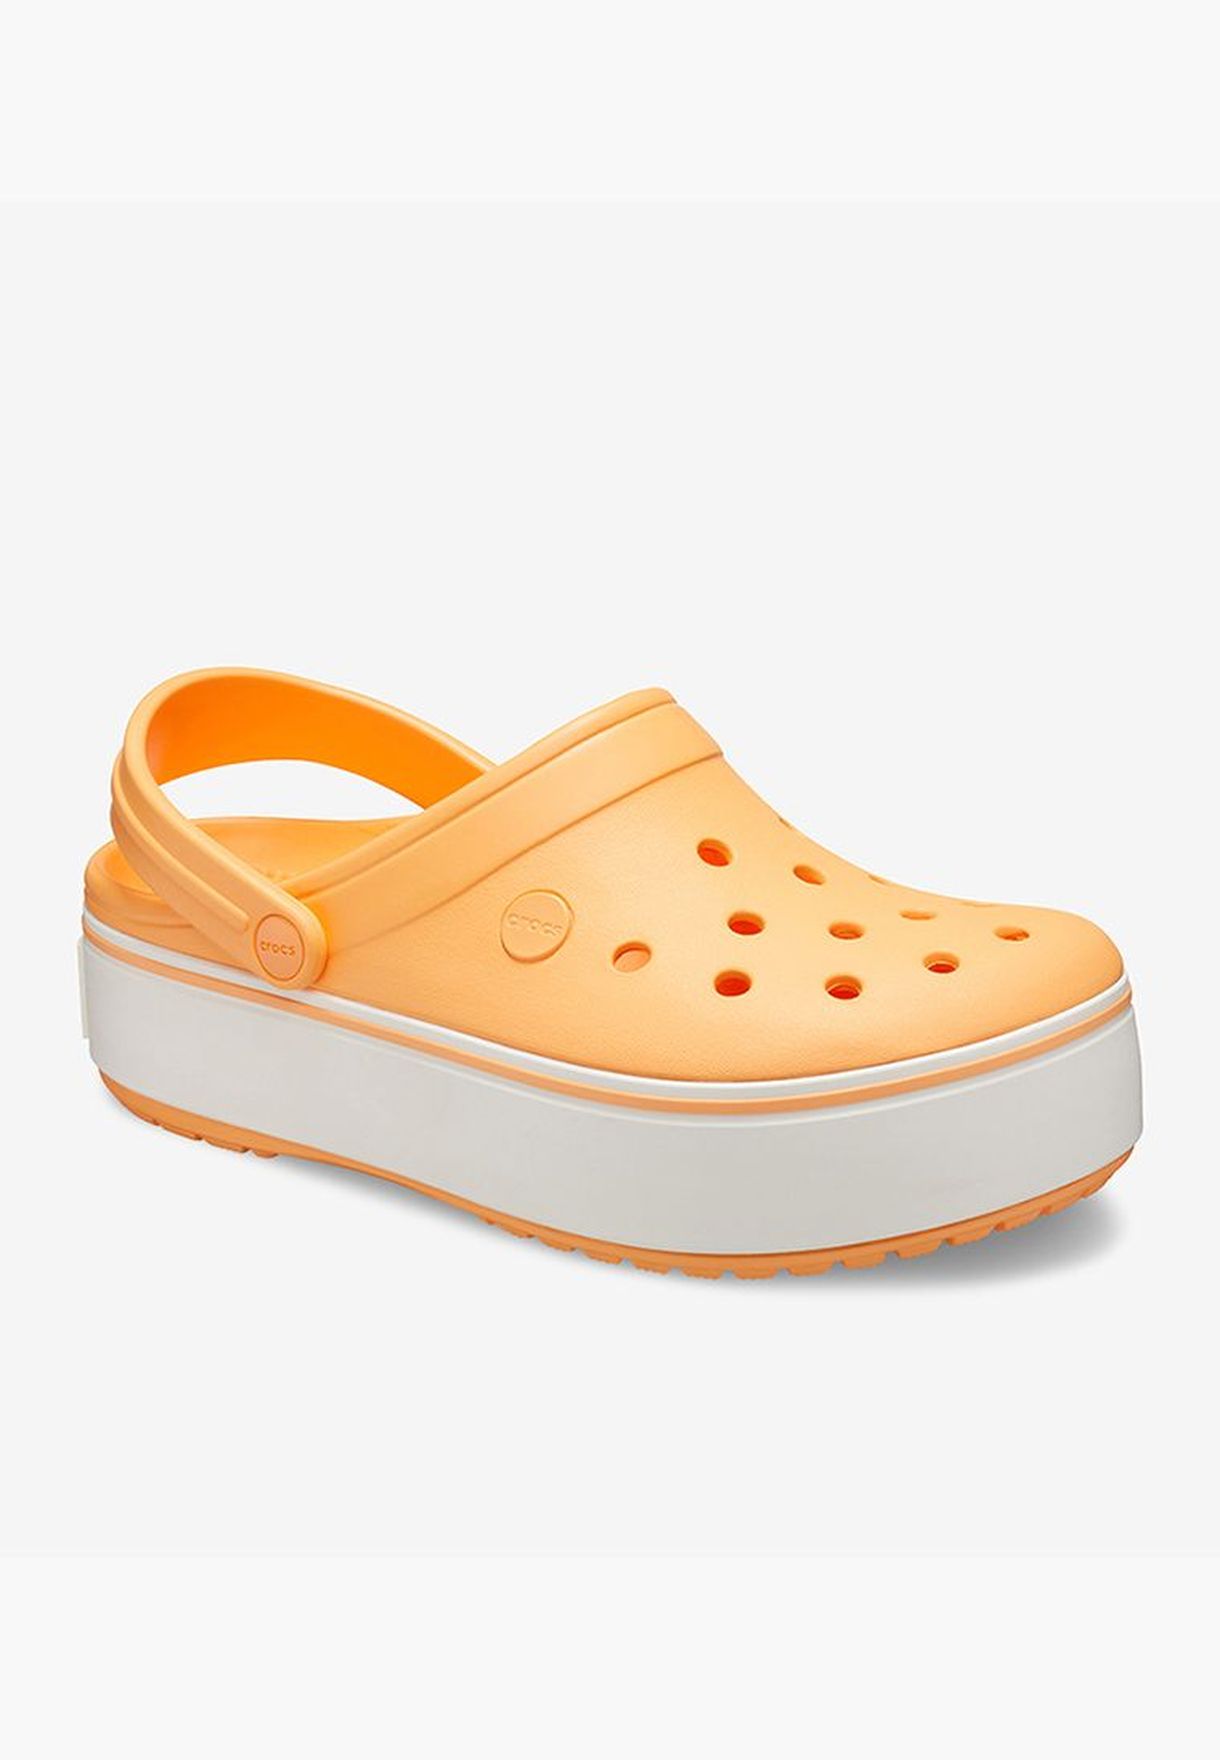 crocs crocband orange